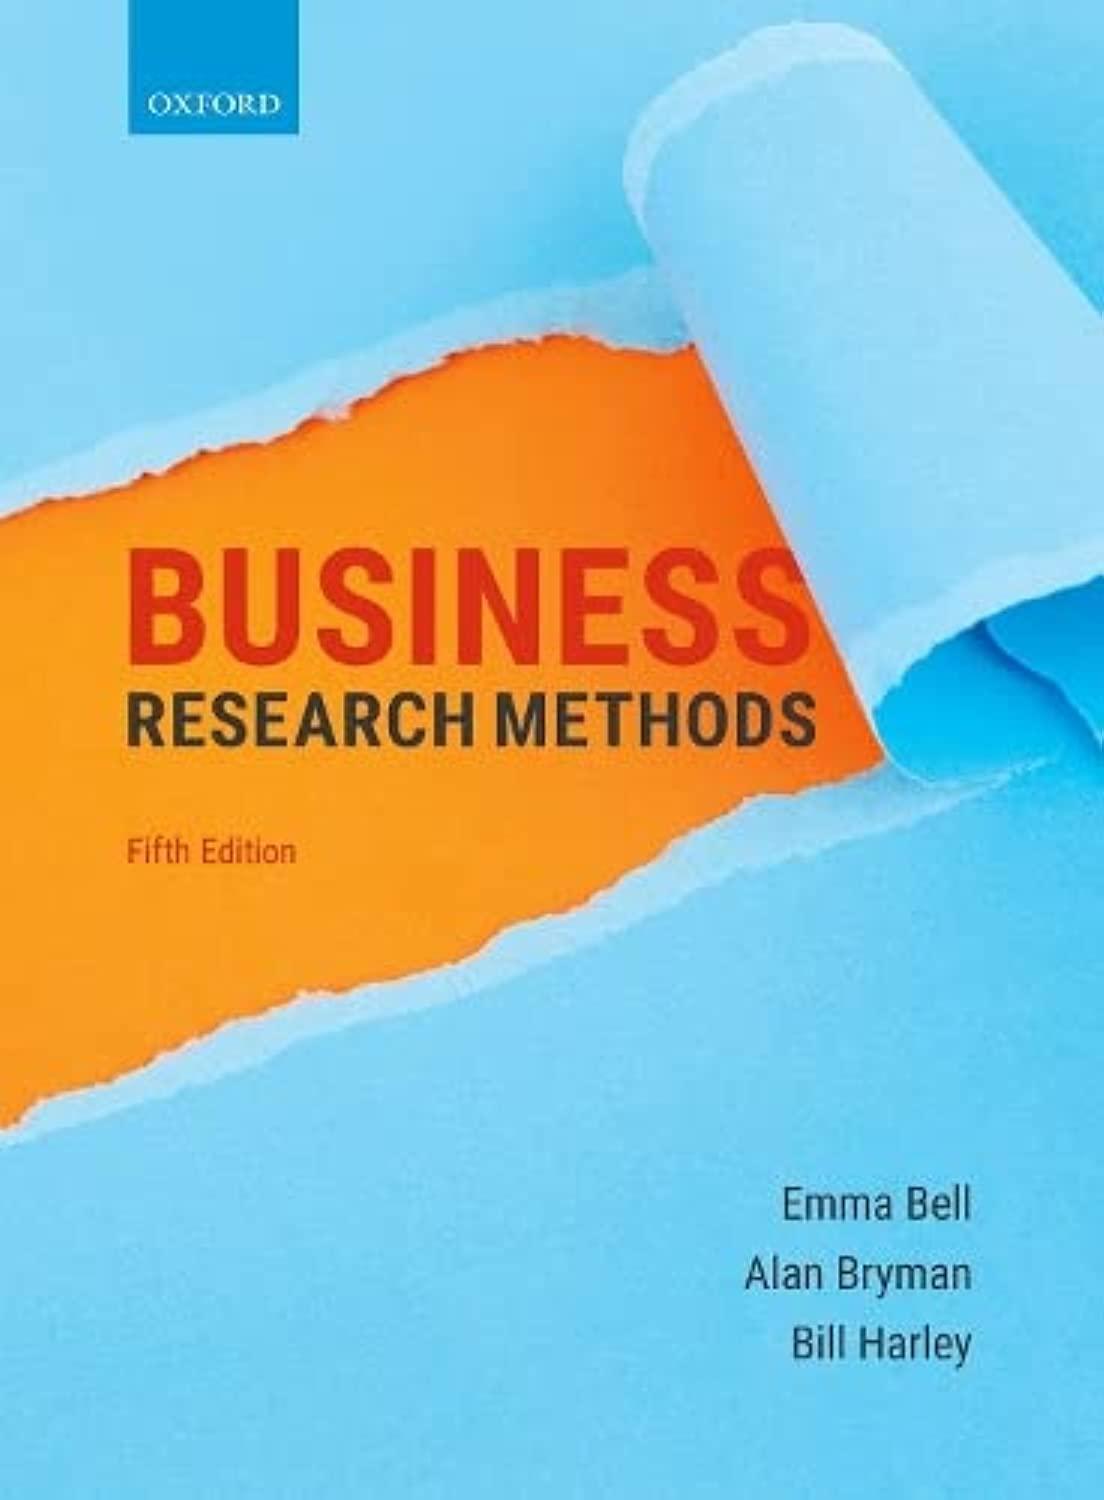 business research methods 5th edition emma bell, bill harley, alan bryman 0198809875, 9780198809876